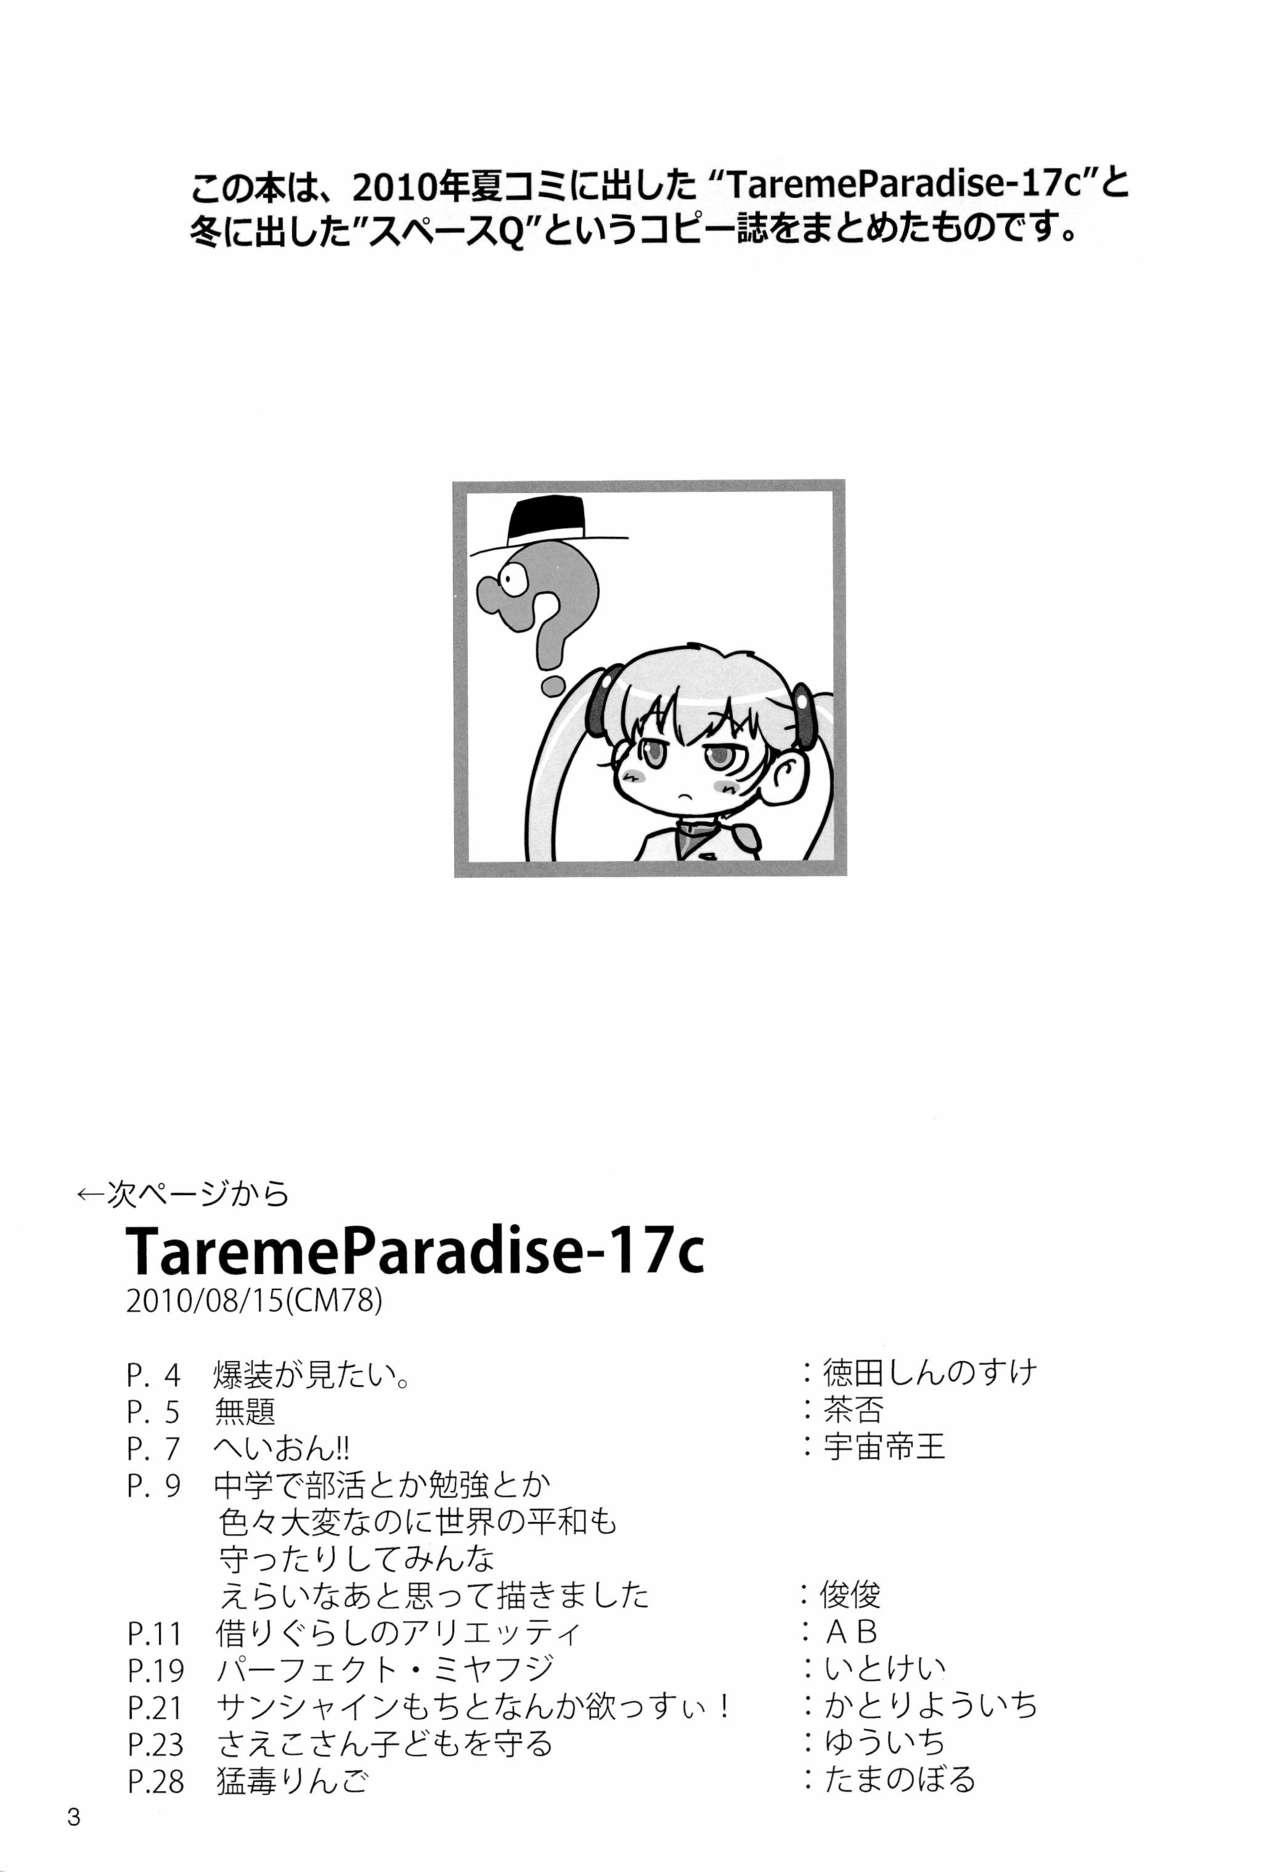 Tareme Paradise-17 c and Q 2